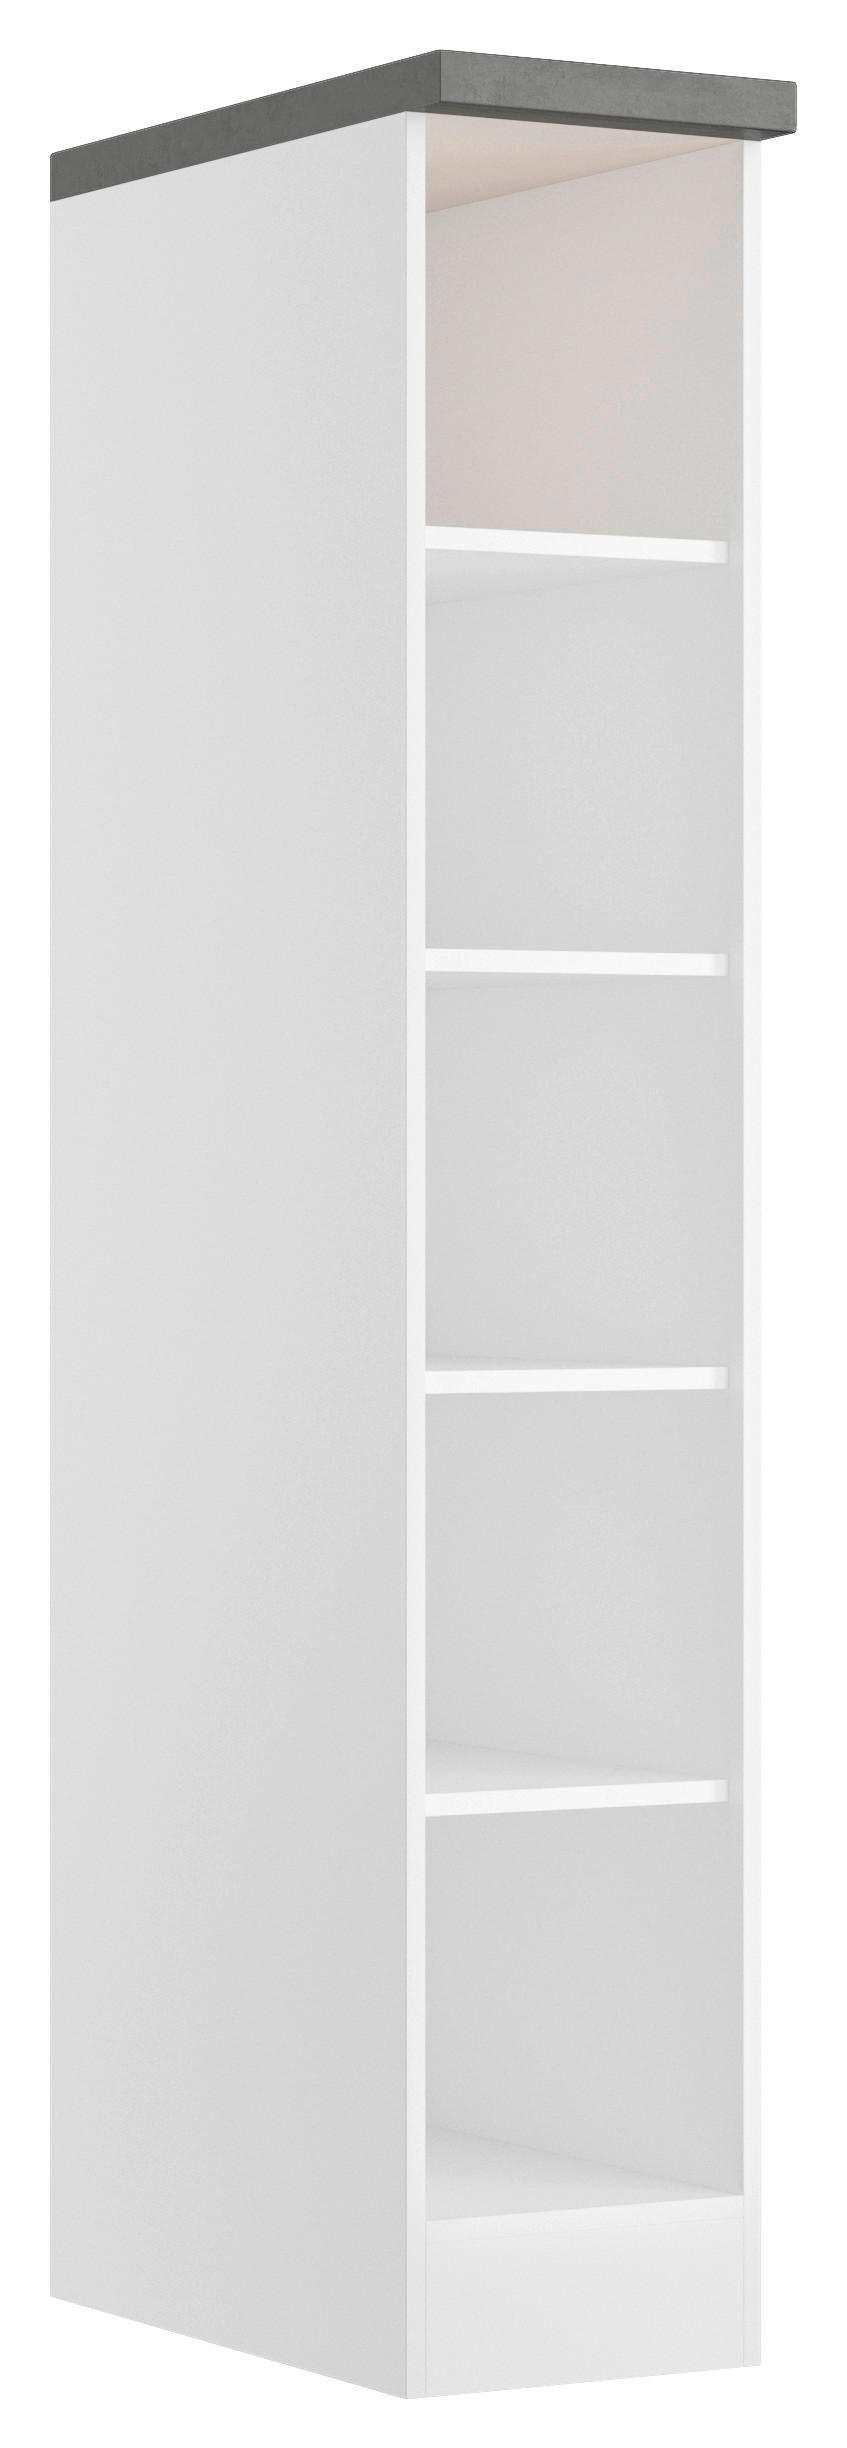 REGAL Grau, Weiß  - Weiß/Grau, LIFESTYLE, Holzwerkstoff (30/166/60cm) - Held